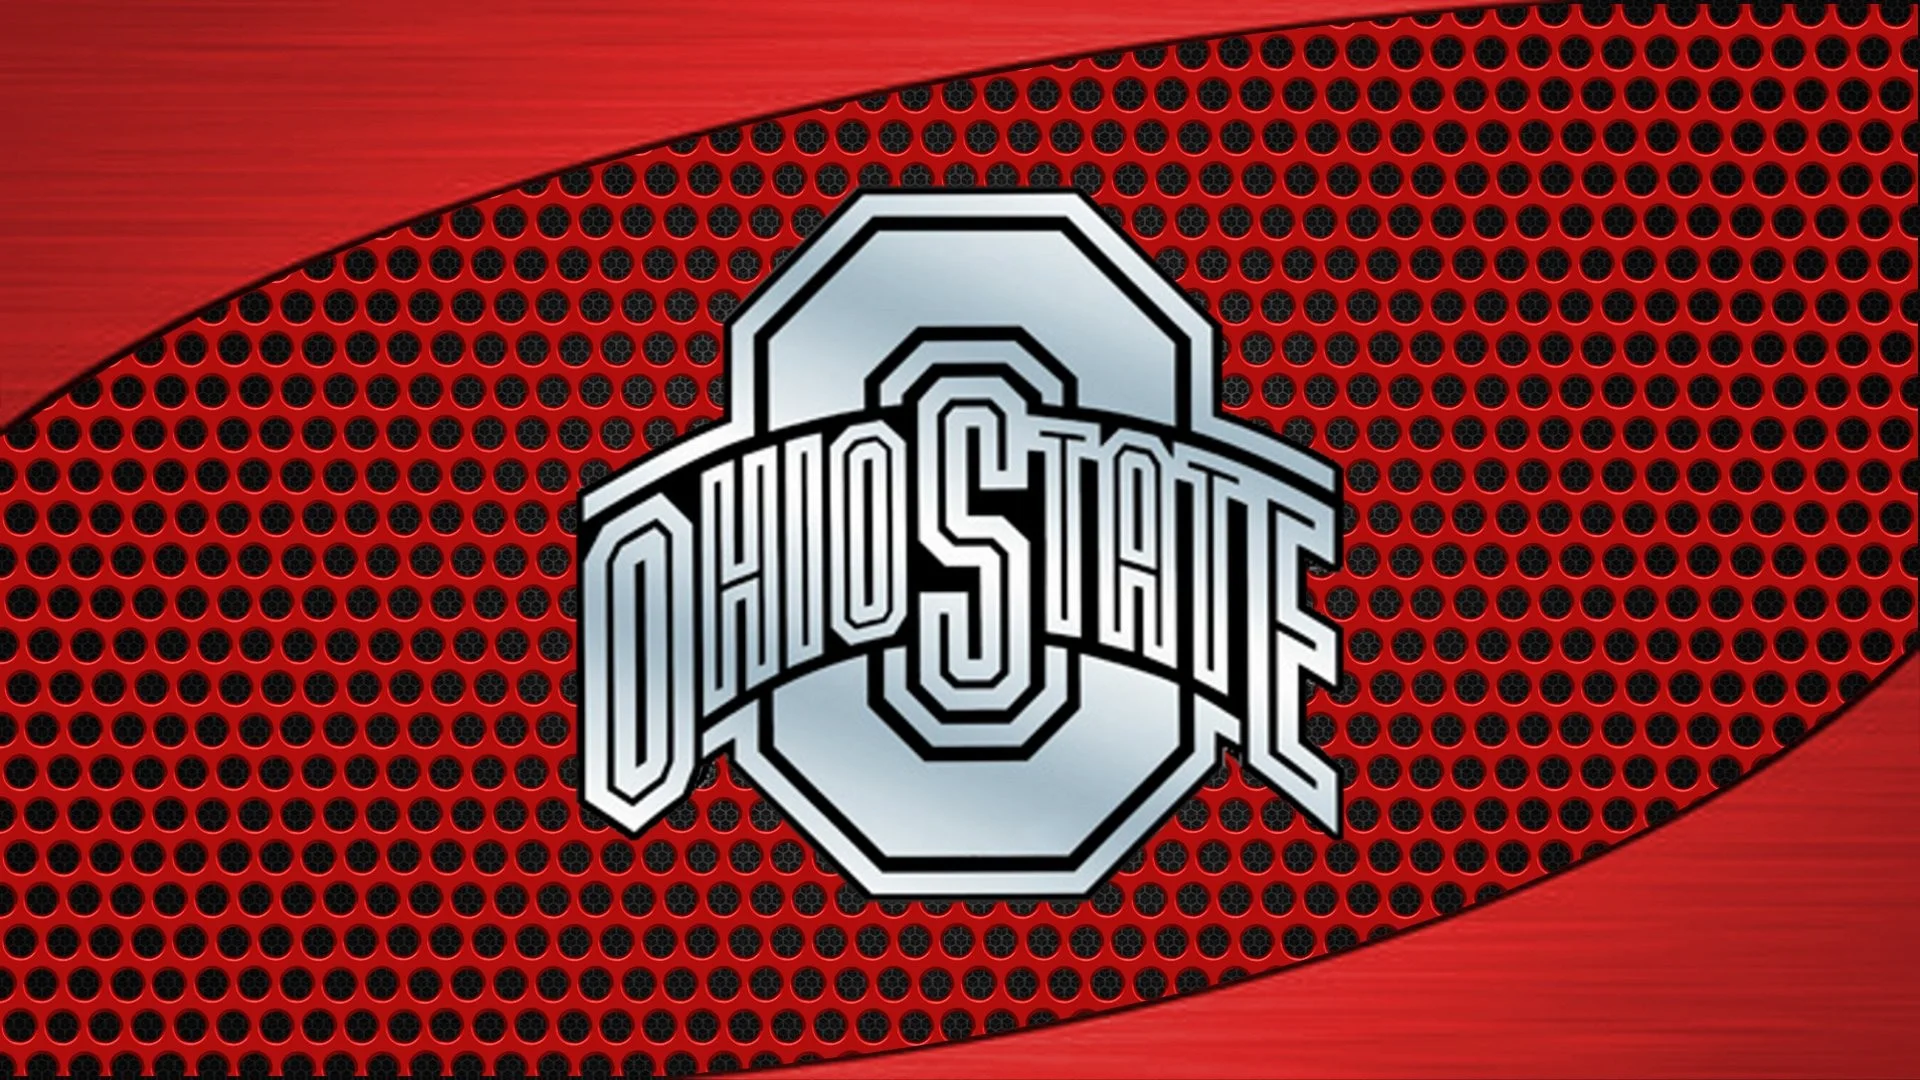 OSU Wallpaper 333 – Ohio State Football Wallpaper (29289012) – Fanpop